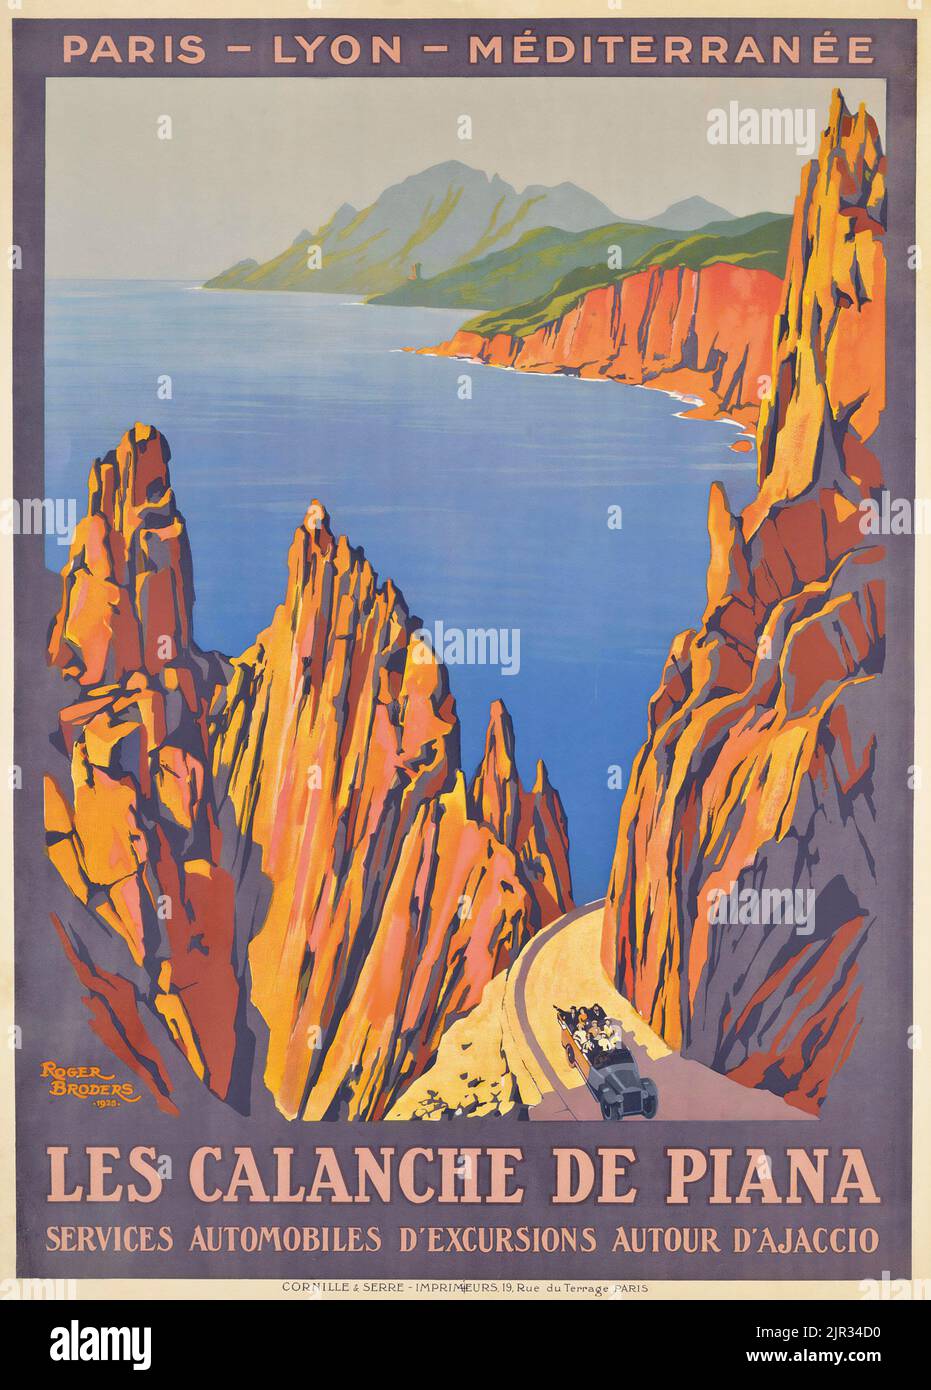 Vintage-Reiseposter - Roger Broders - LES CALANCHE DE PIANA, Korsika - Paris Lyon Mediterranee 1923. Stockfoto